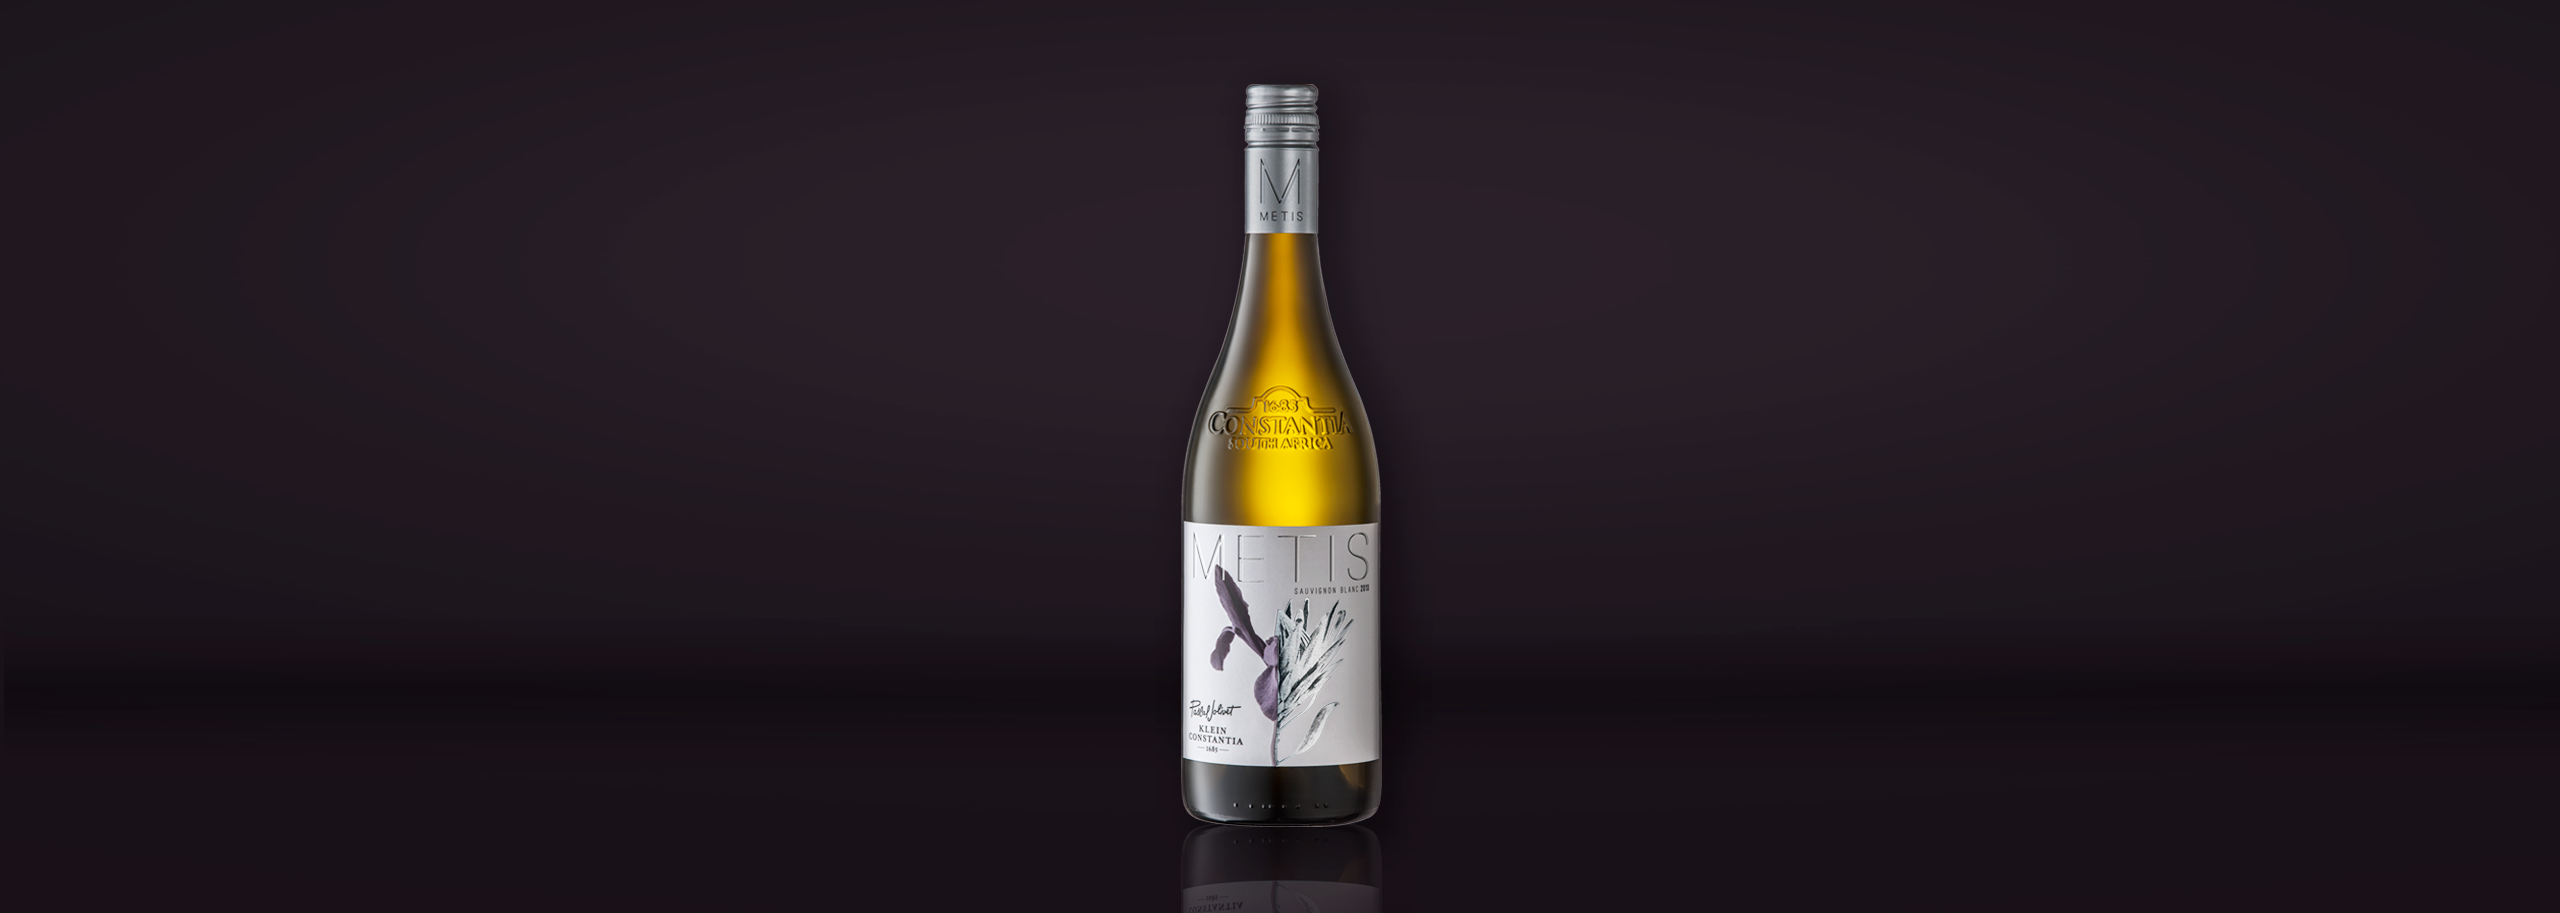 Klein Constantia Metis Wine Label-1